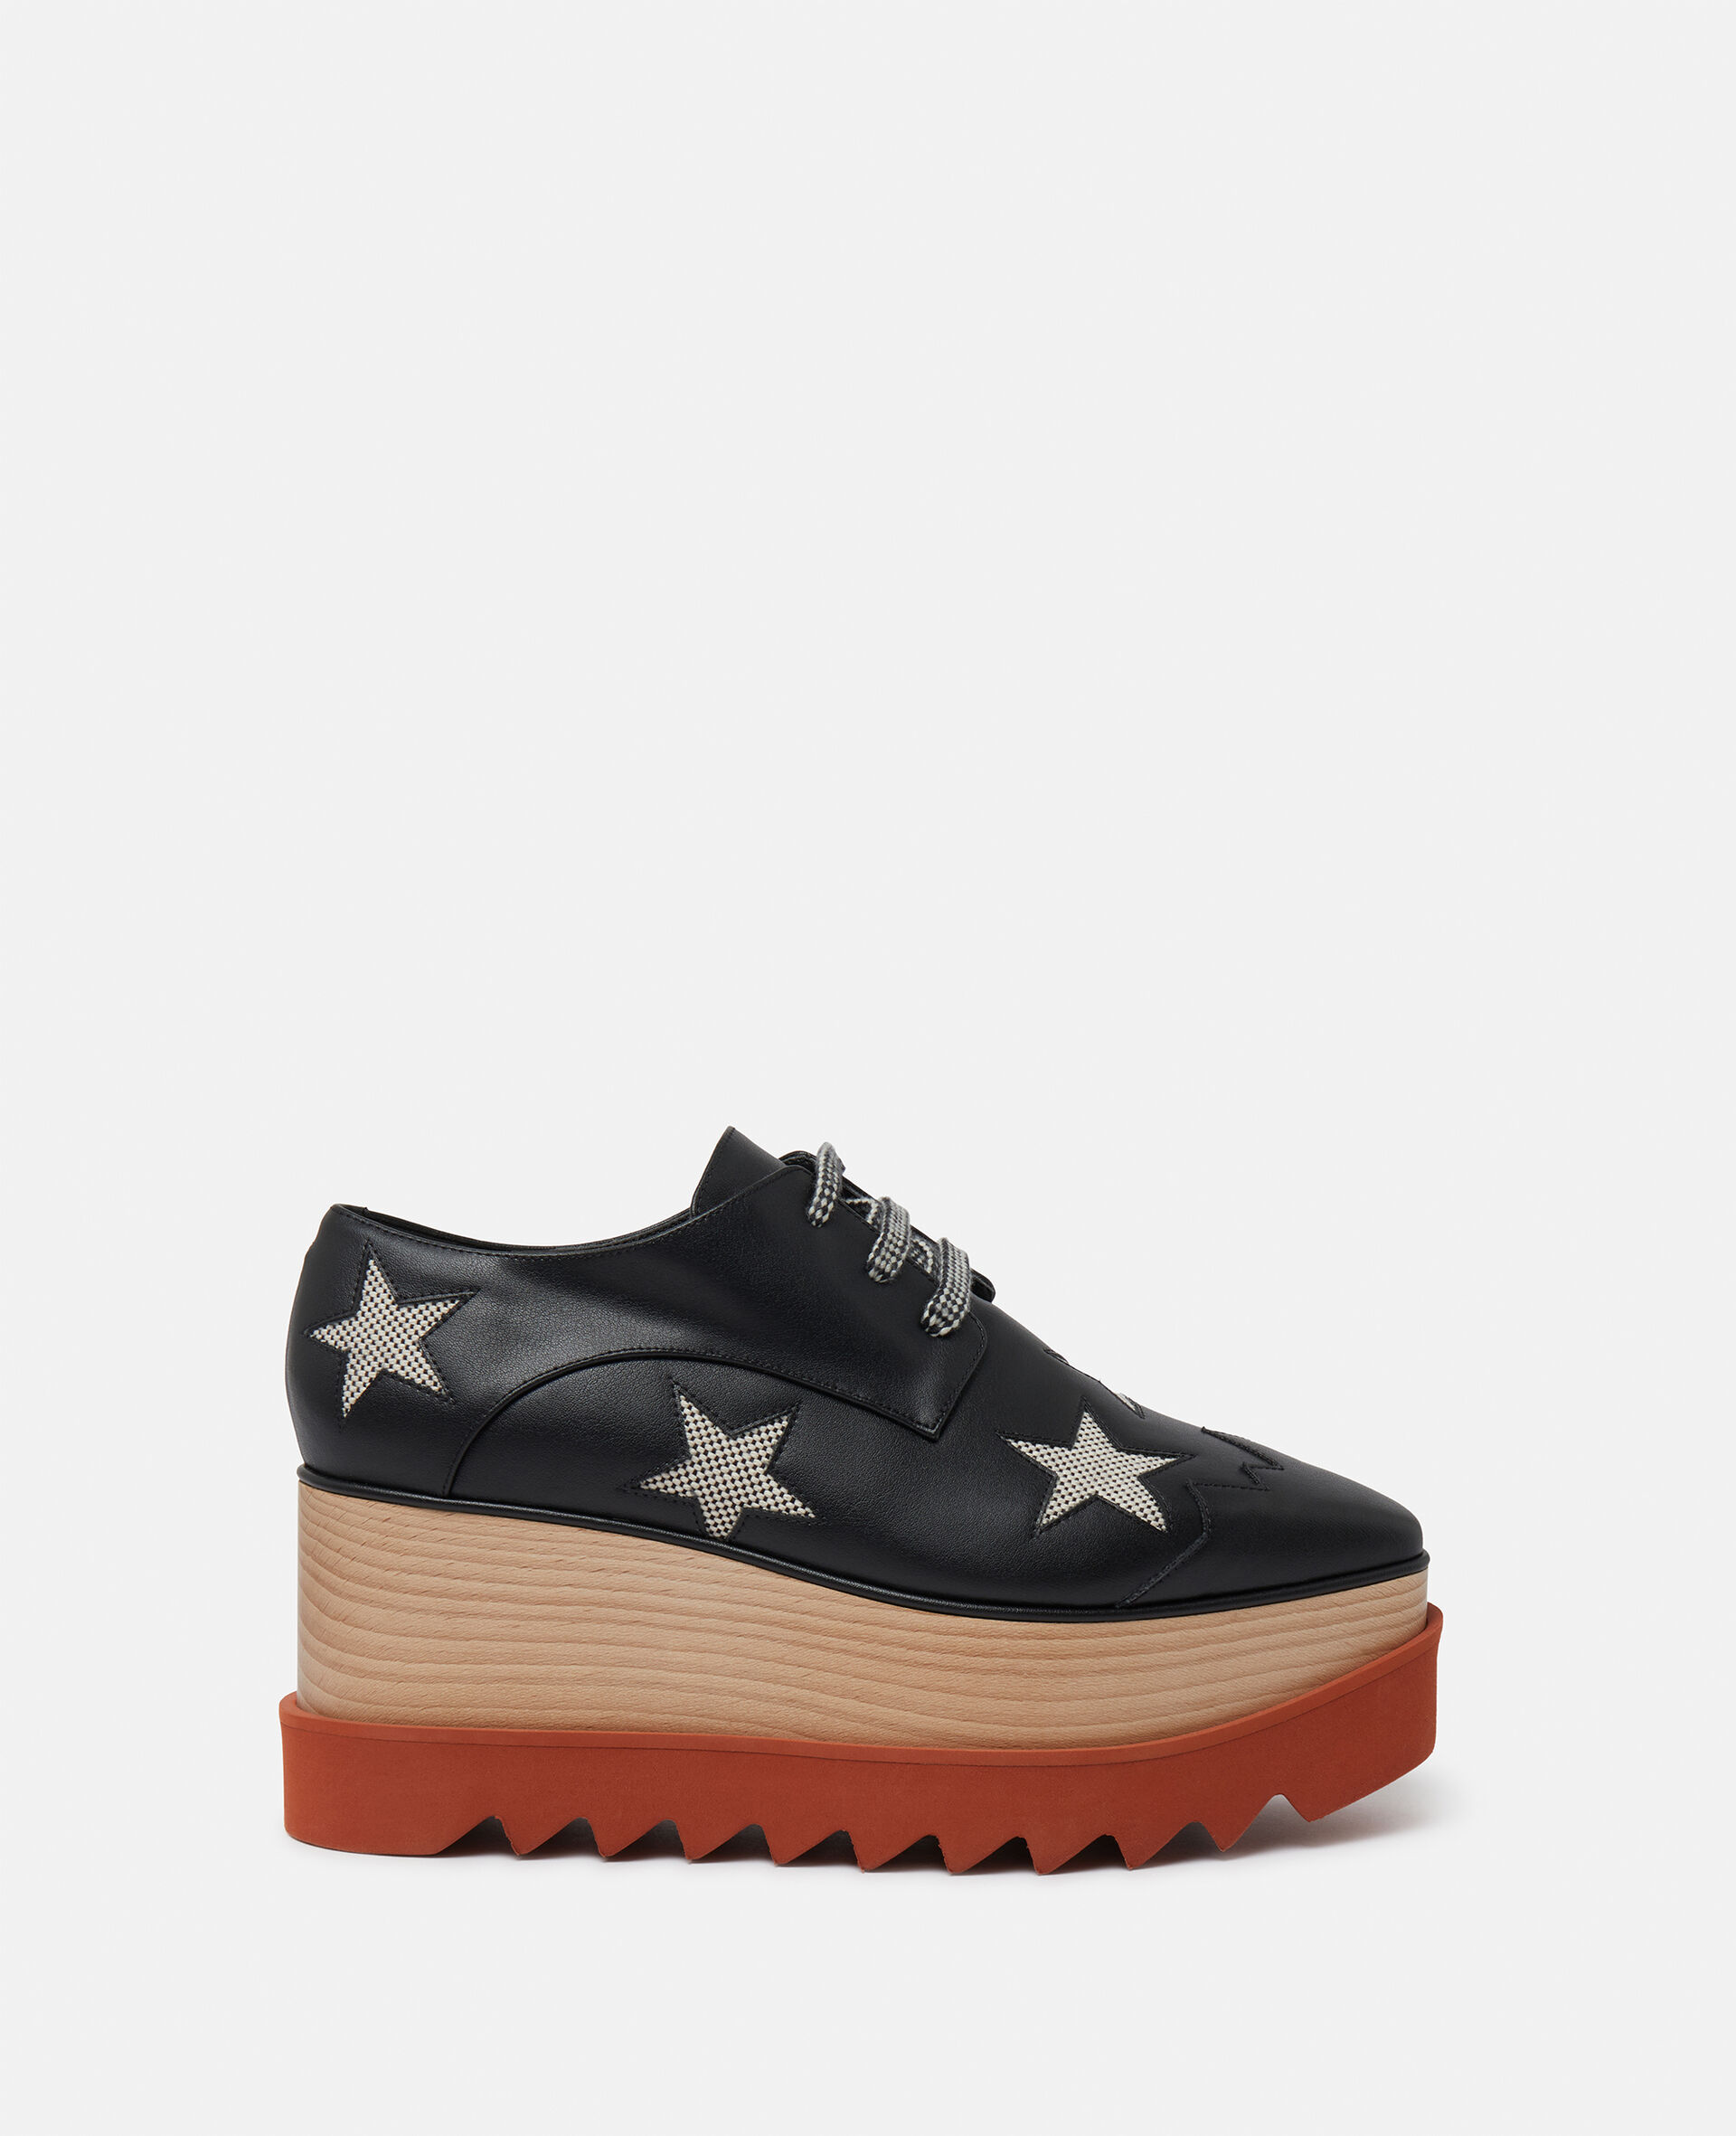 Elyse Stars Platform Shoes-Multicoloured-large image number 0